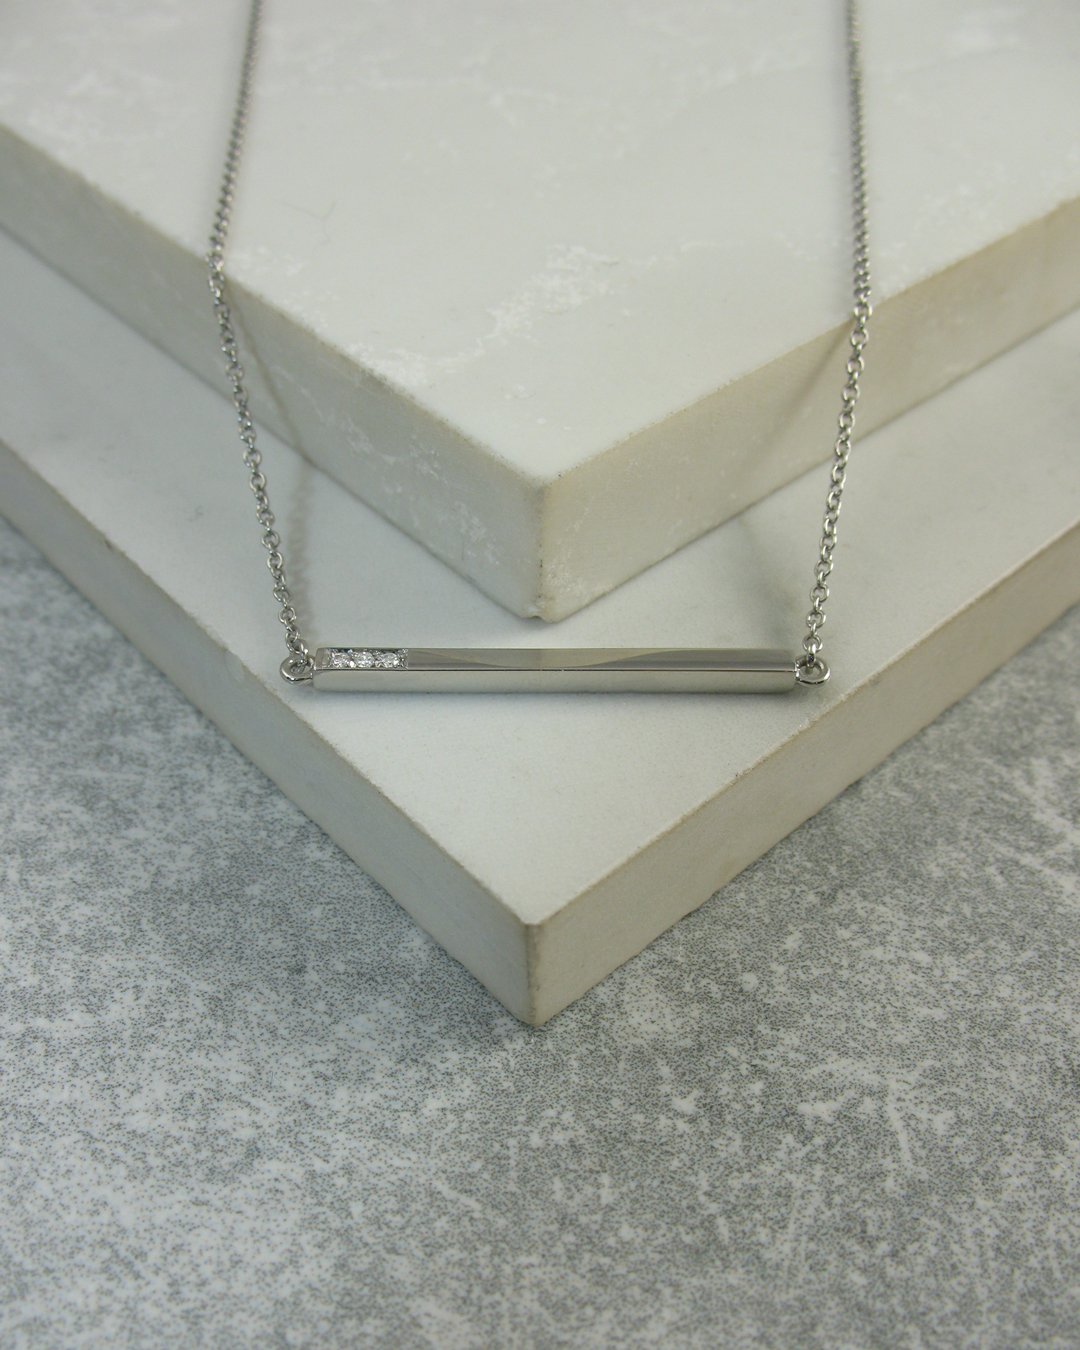 A classic contemporary style platinum and diamond pendant